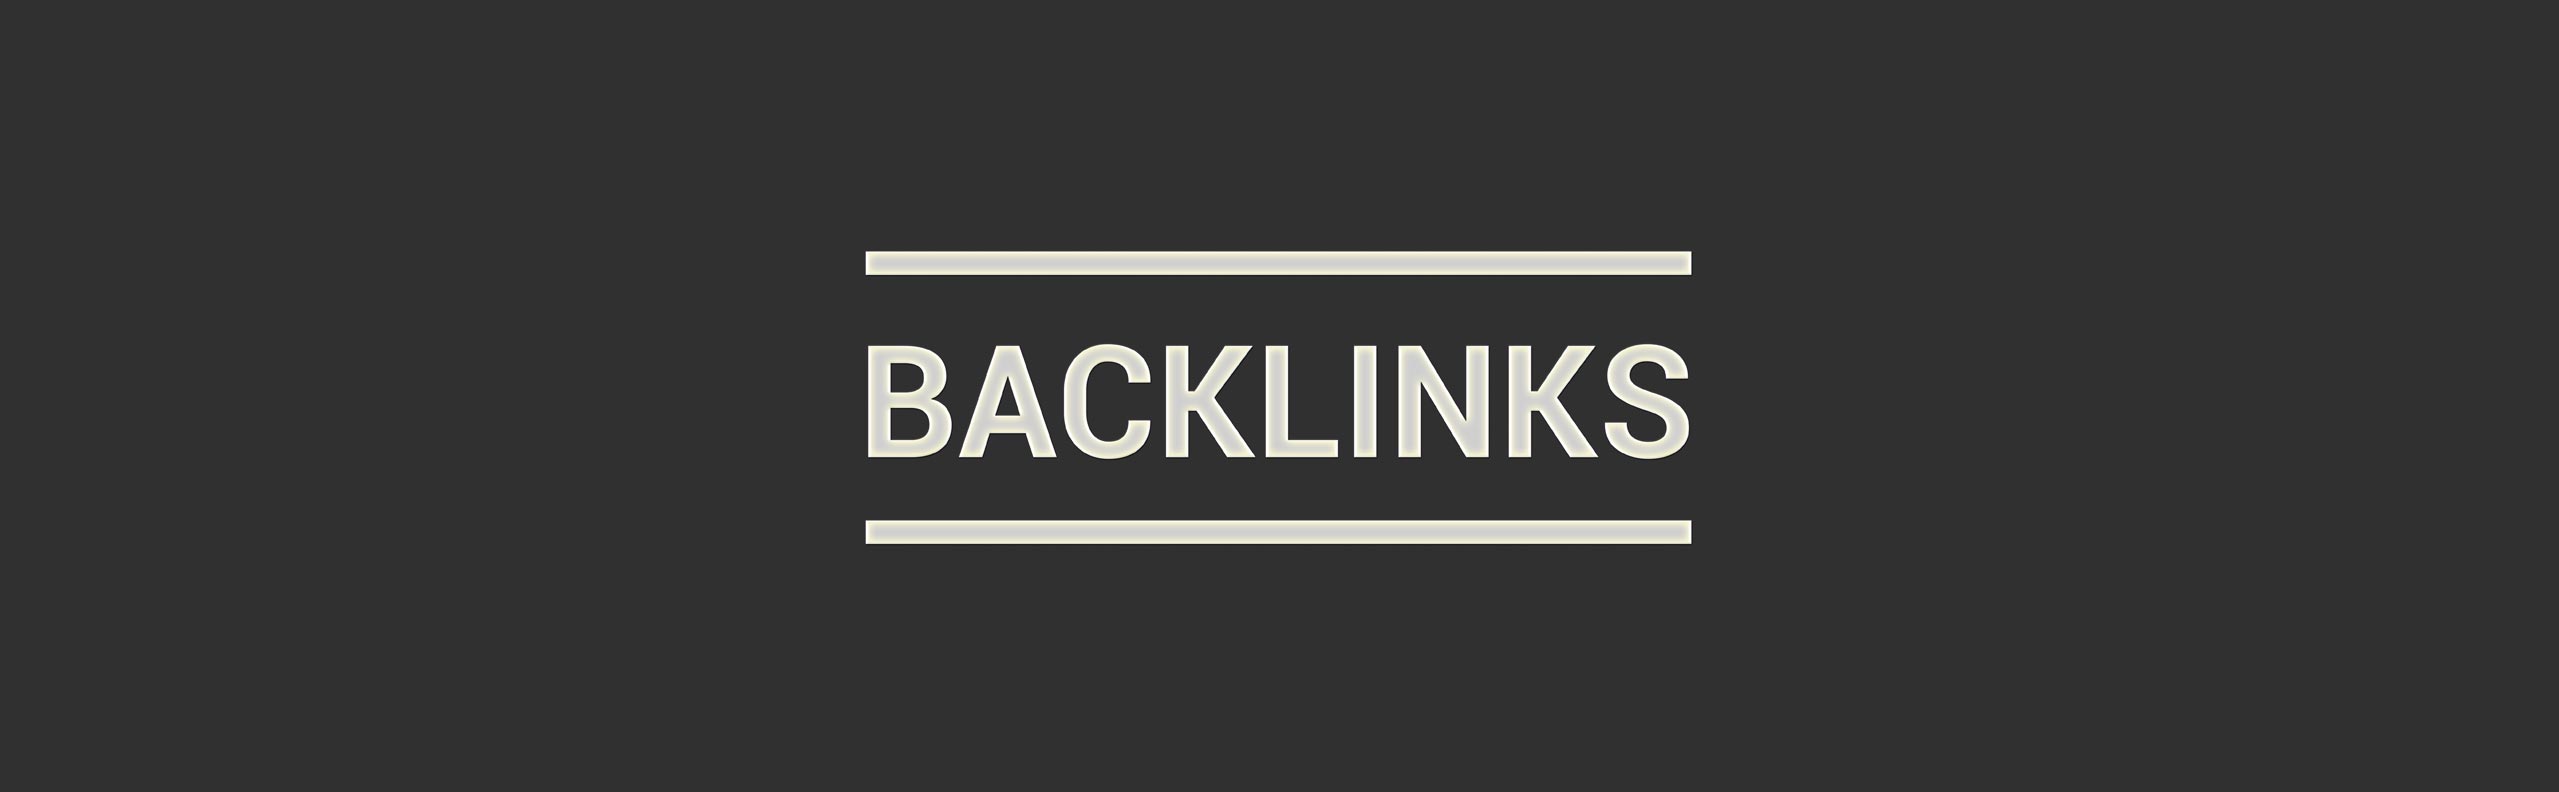 Build Backlinks to Your Website